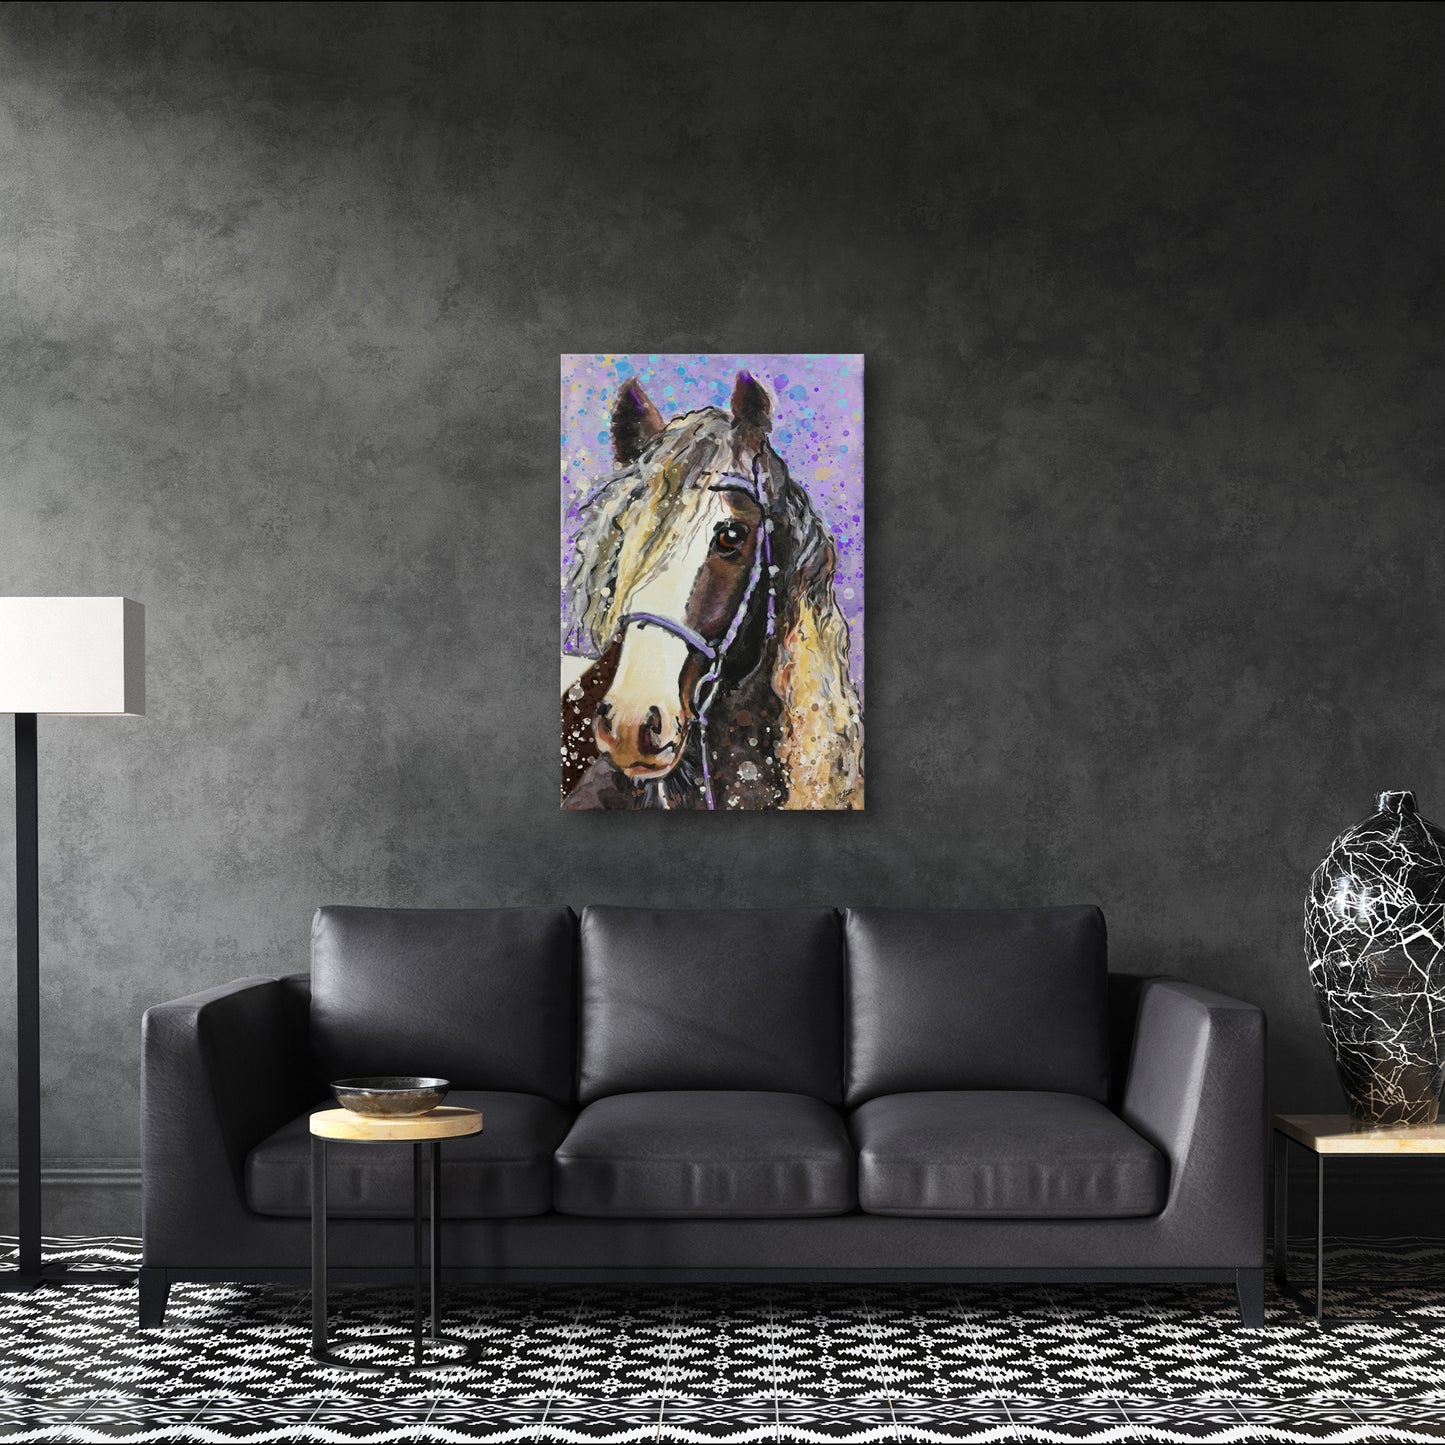 Gypsy - Horse Portrait